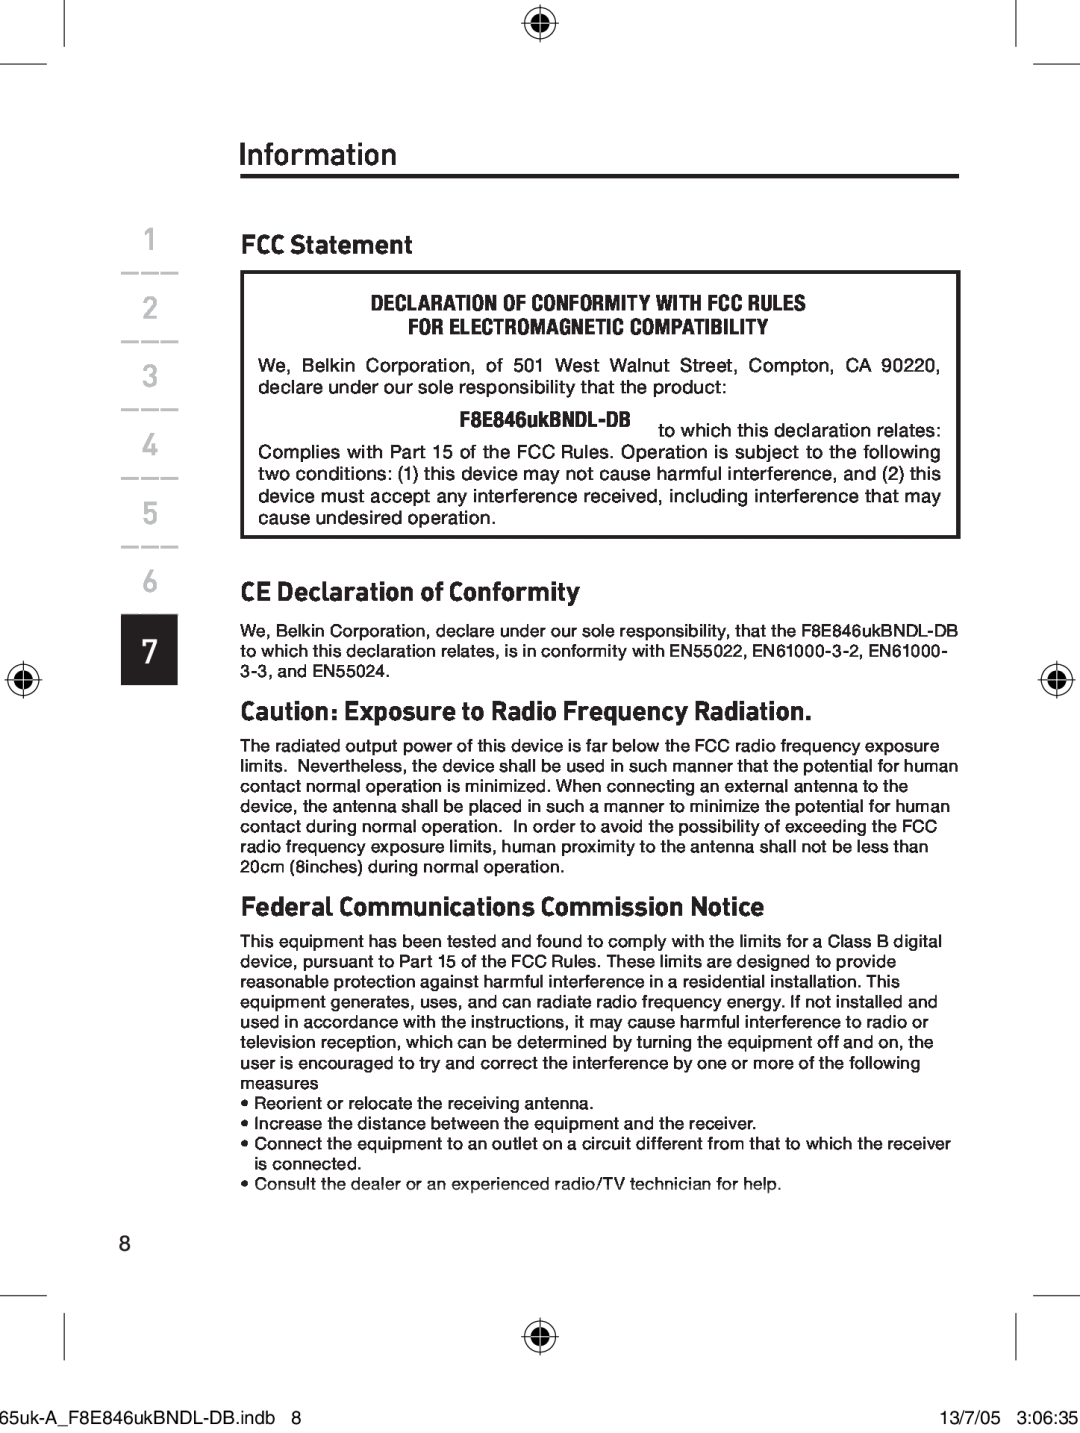 Belkin F8E846UKBNDL-DB Information, FCC Statement, CE Declaration of Conformity, Federal Communications Commission Notice 